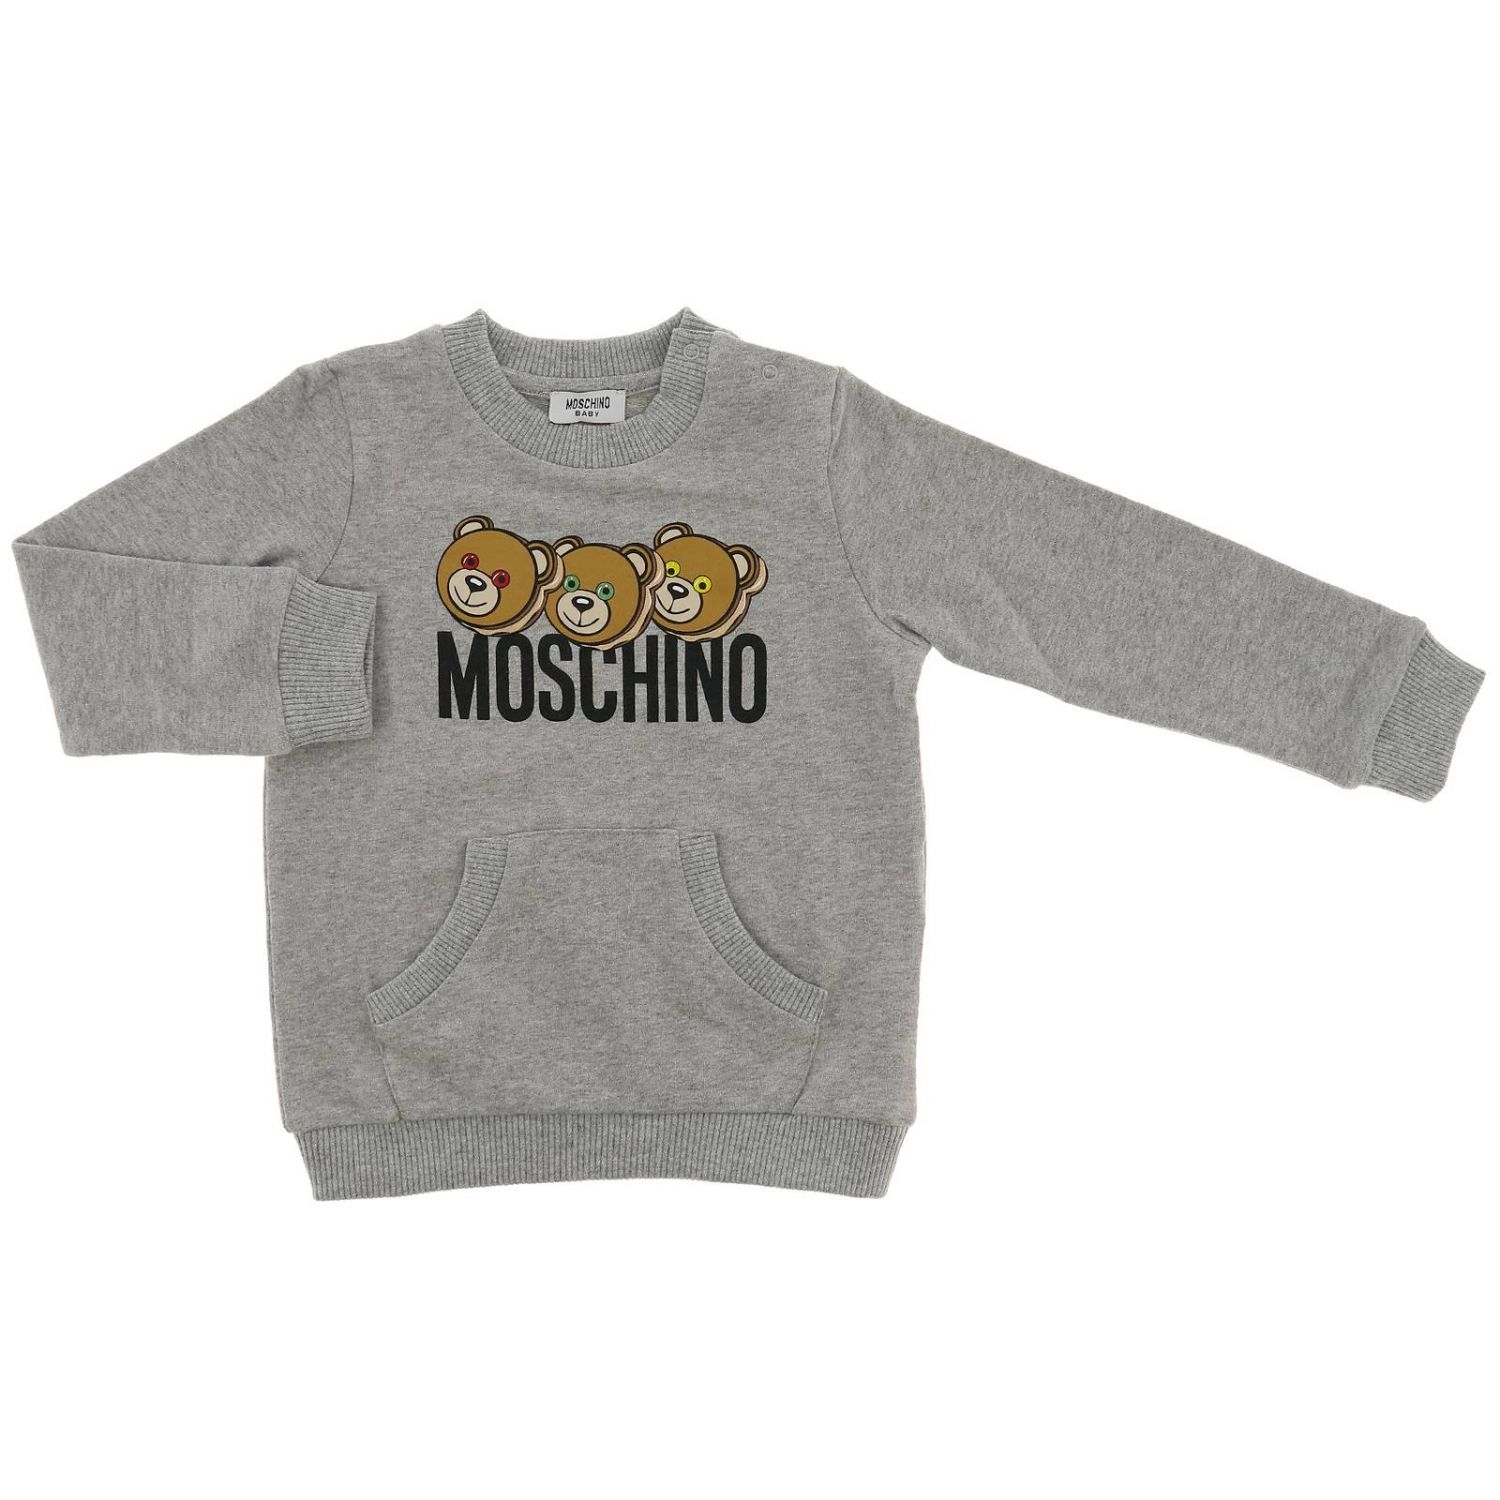 moschino grey jumper